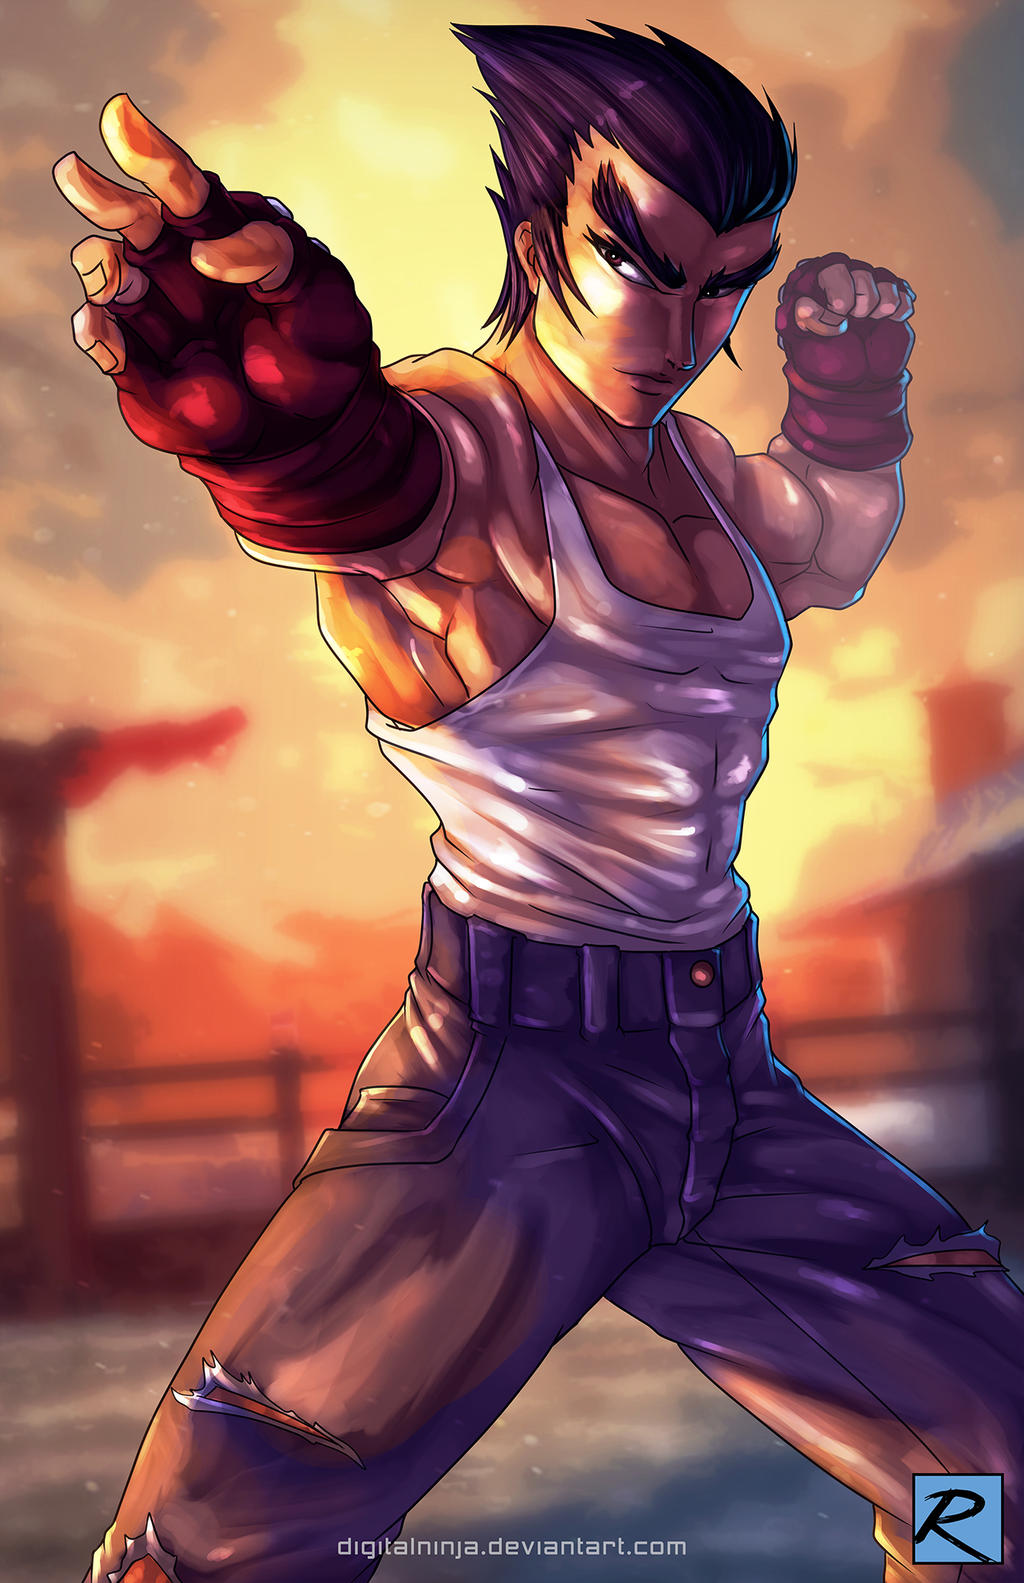 A Young Kazuya by @mkd__sn : r/Tekken